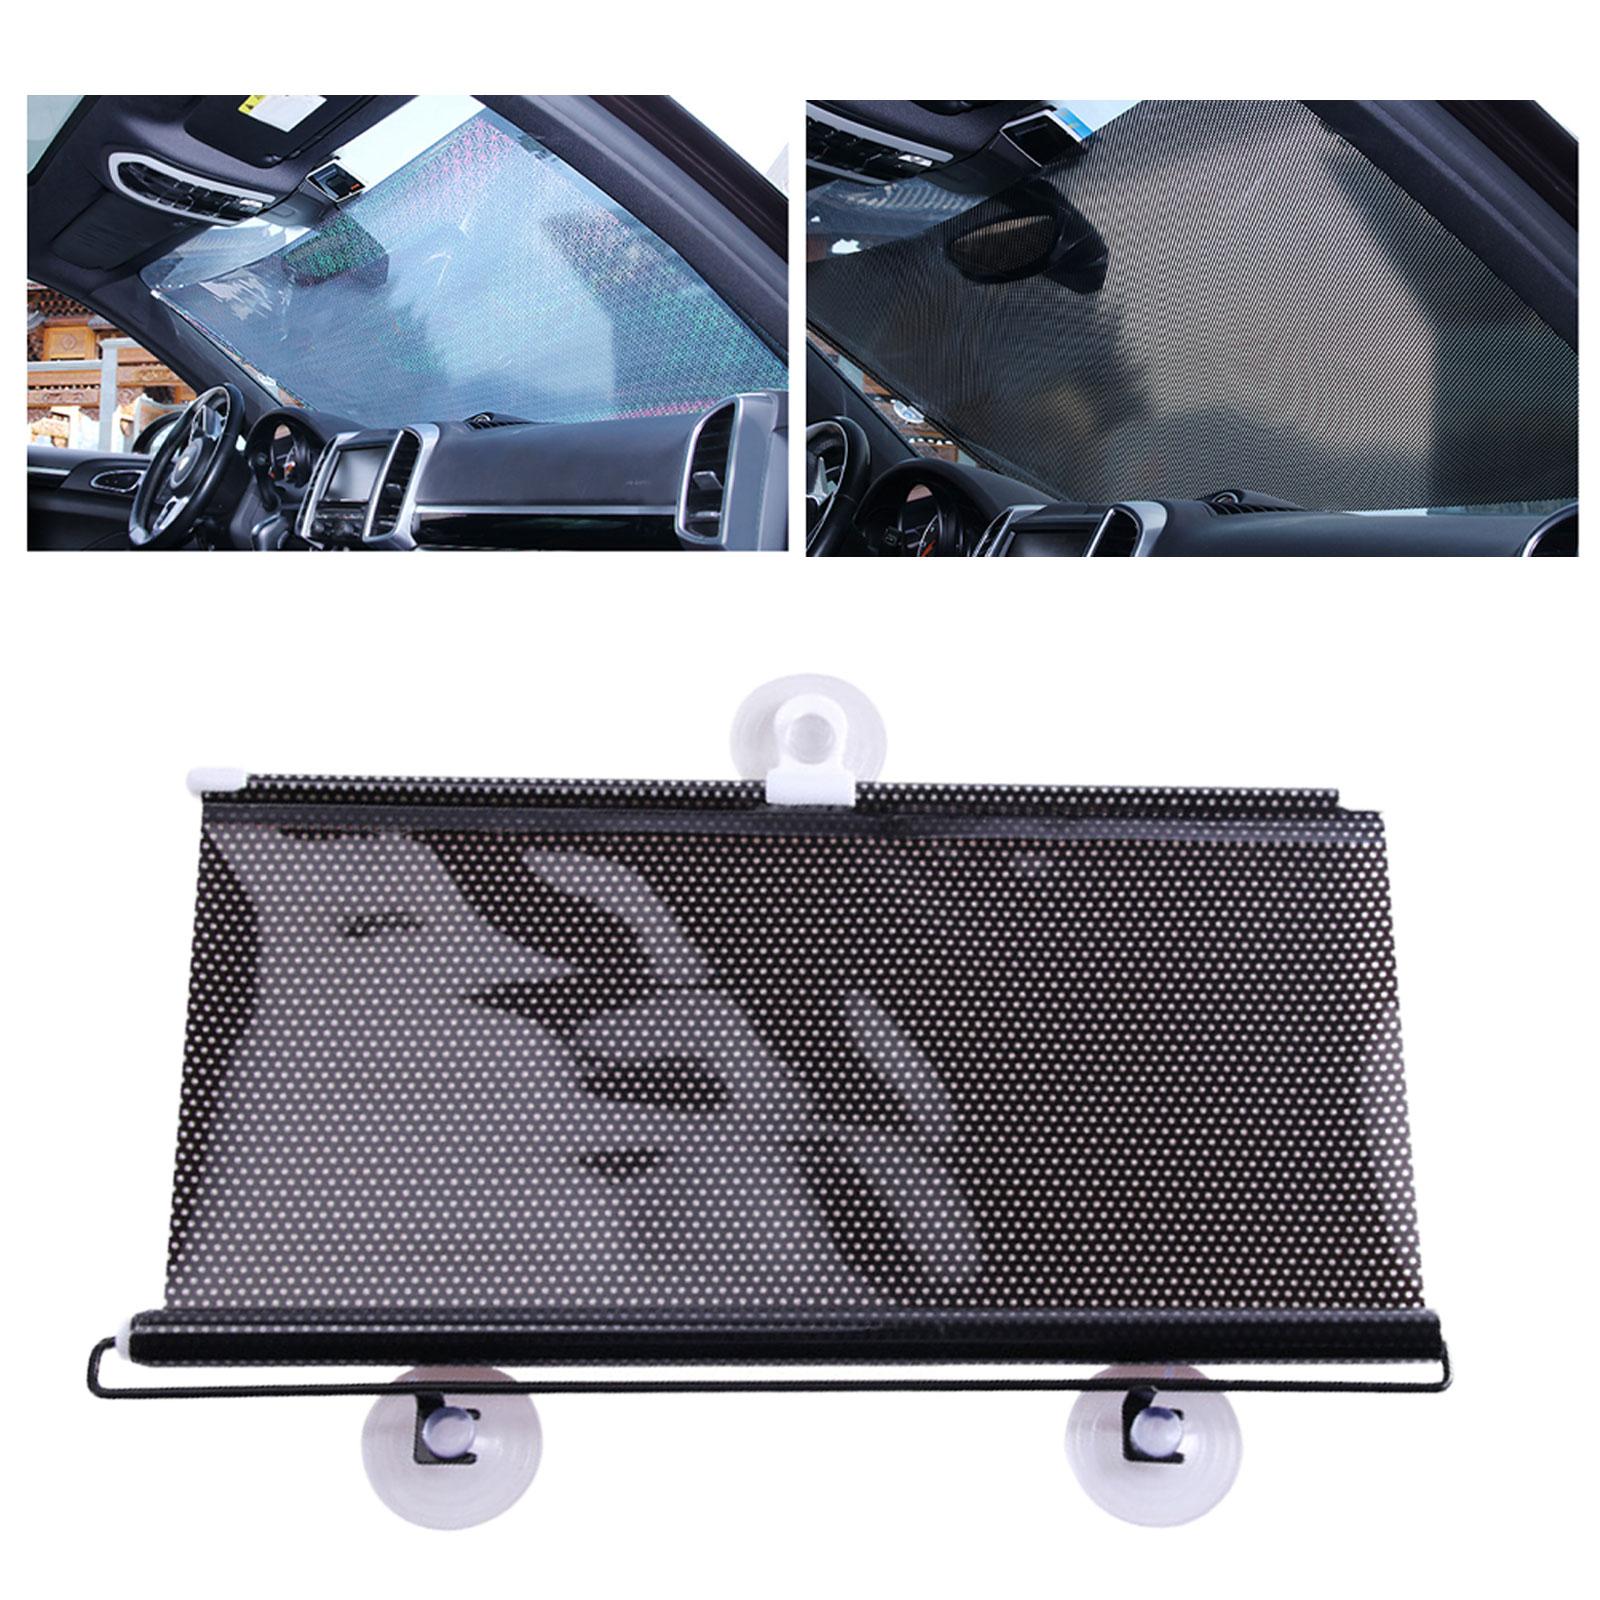 Car Windshield Sunshade Block UV Rays Car Shade for Most Cars, Vehicles 58cmx125cm